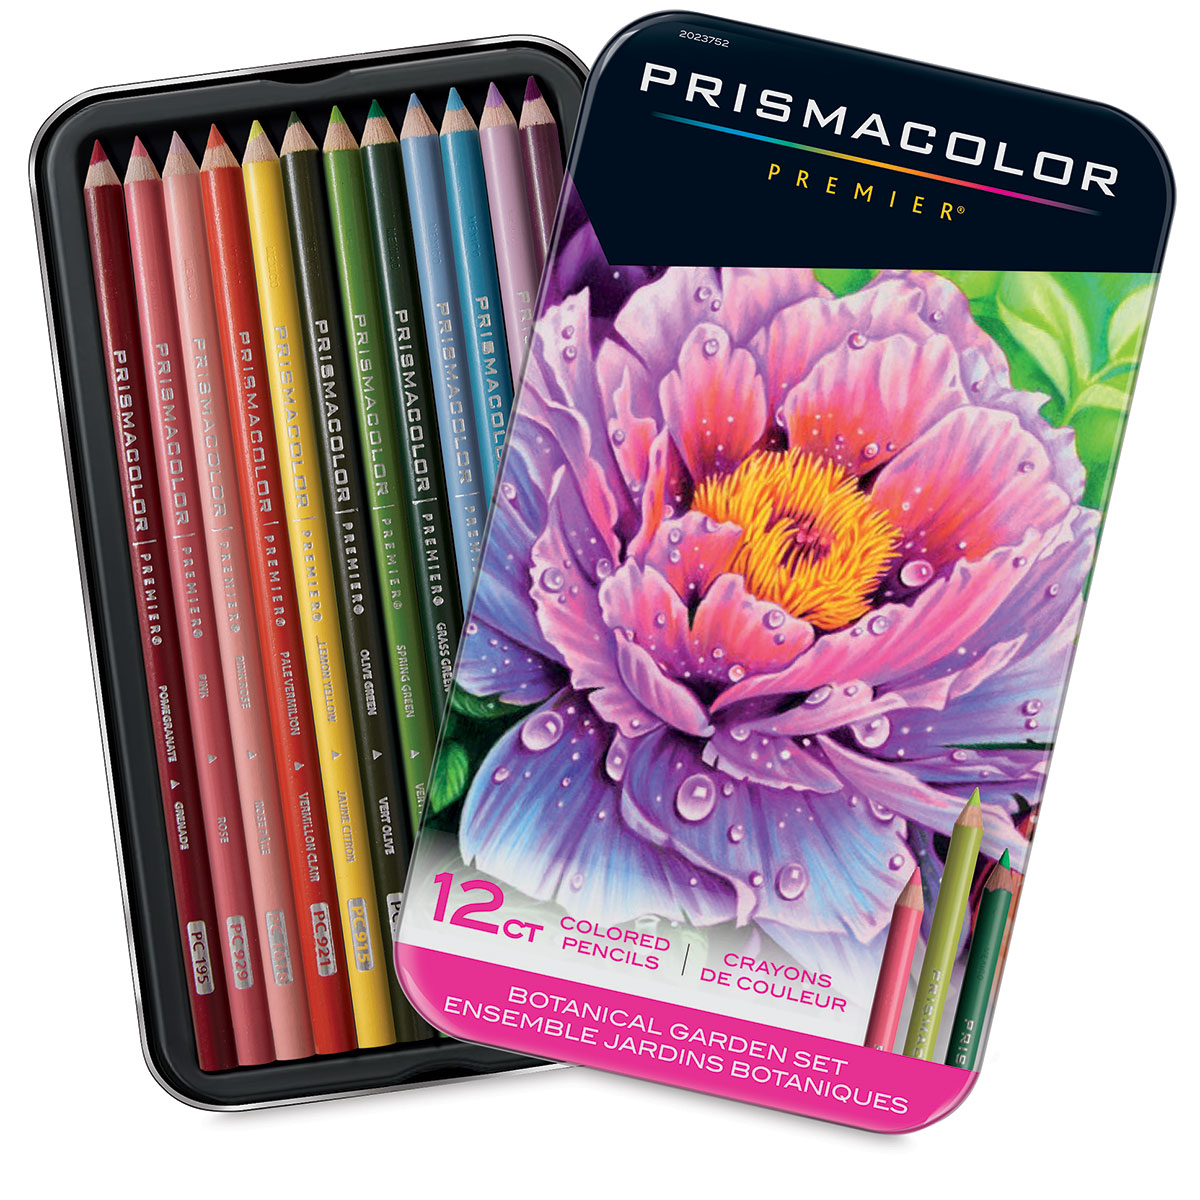 COLORED PENCIL Magazine - Get the NEW Prismacolor Premier Art Kit -  Exclusively at Blick Art Materials SHOP